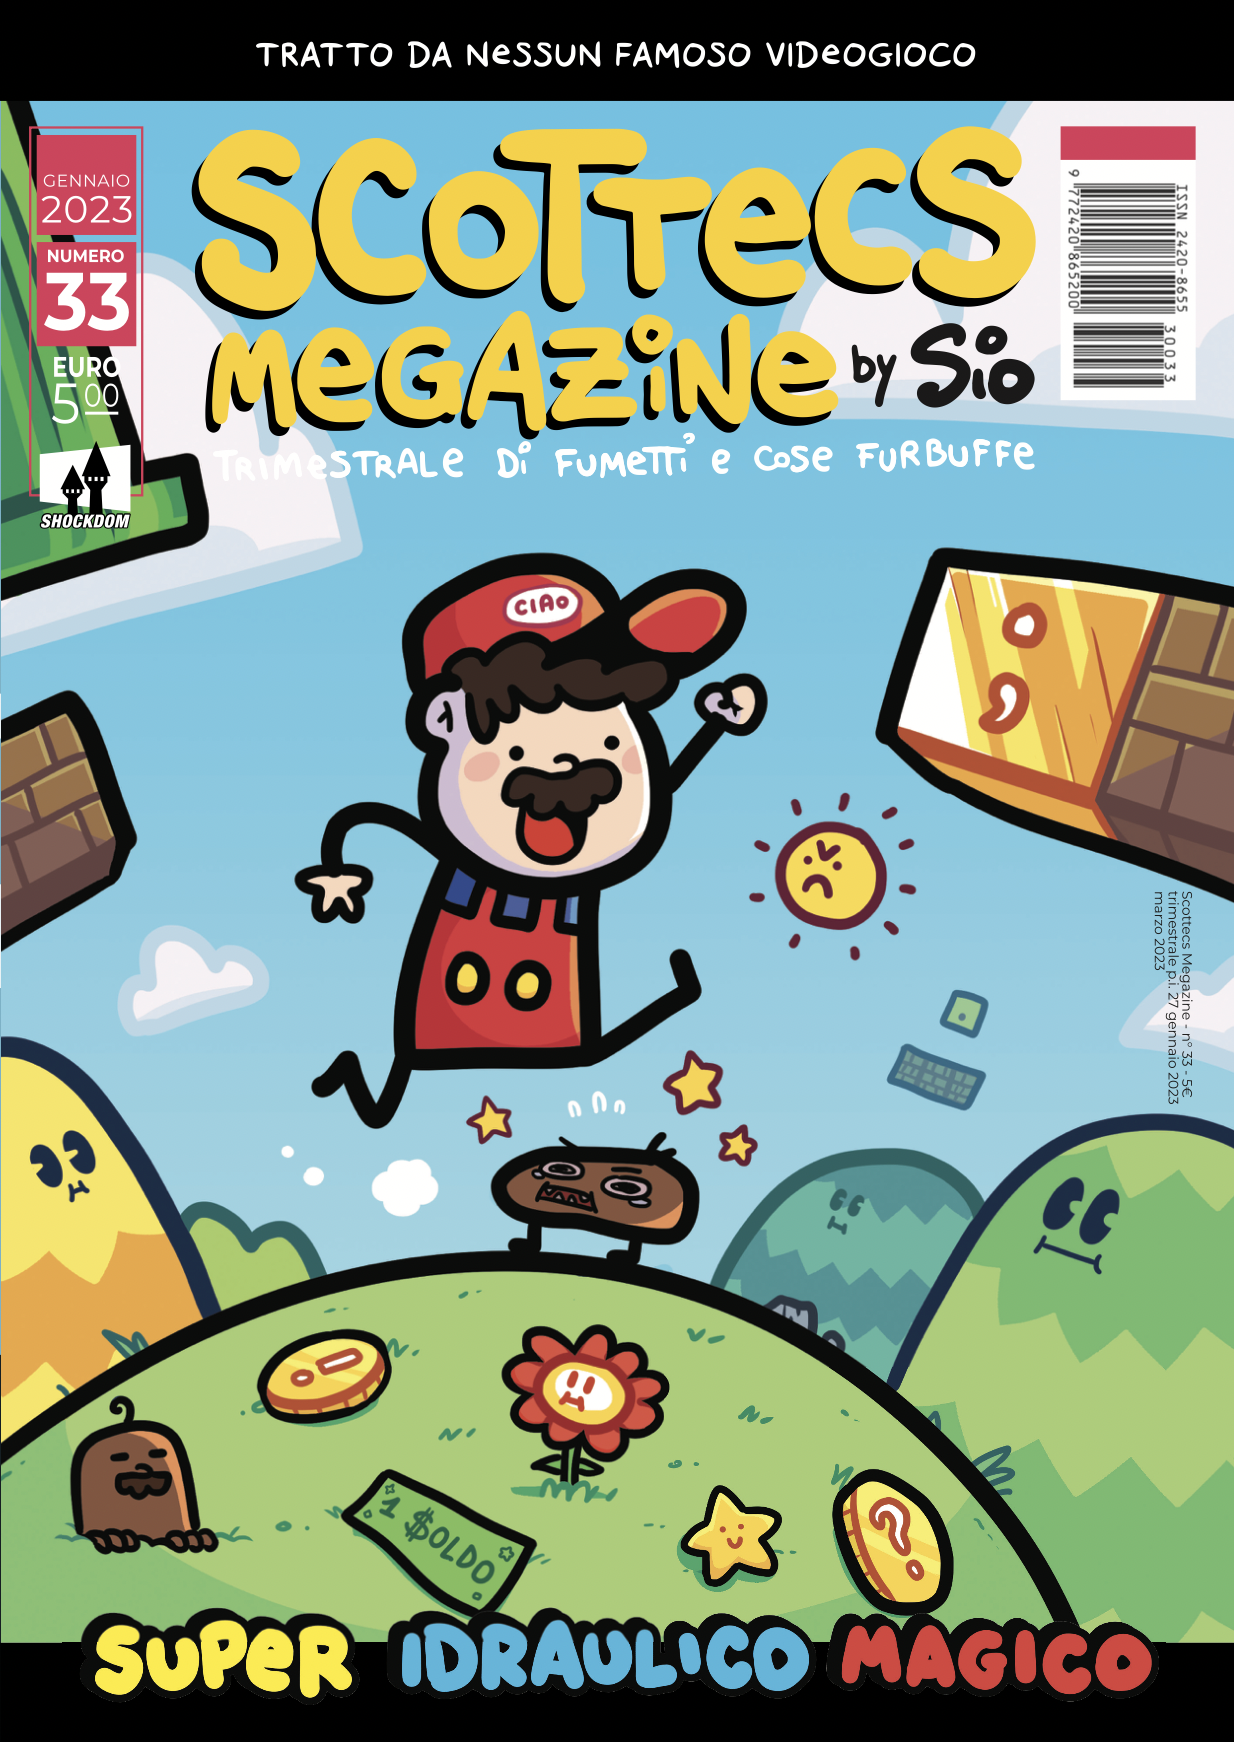 SM Scottecs Megazine COVER 33.png